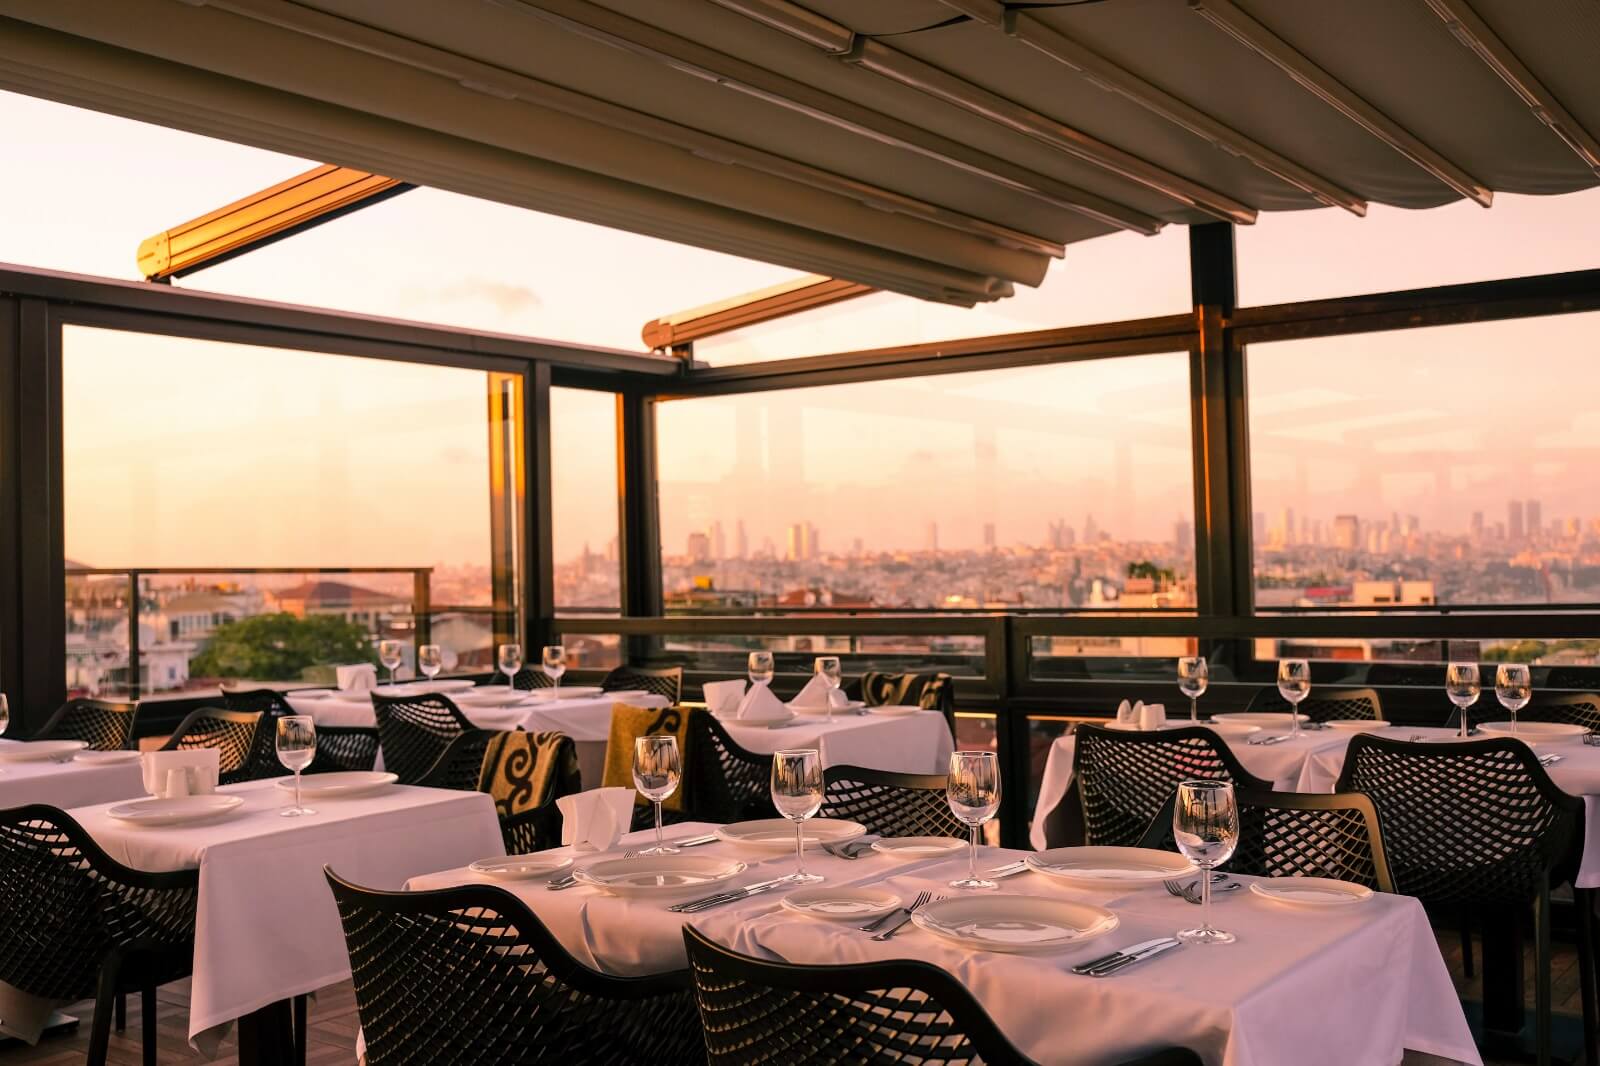 Best Romantic Dinner Restaurant in Istanbul